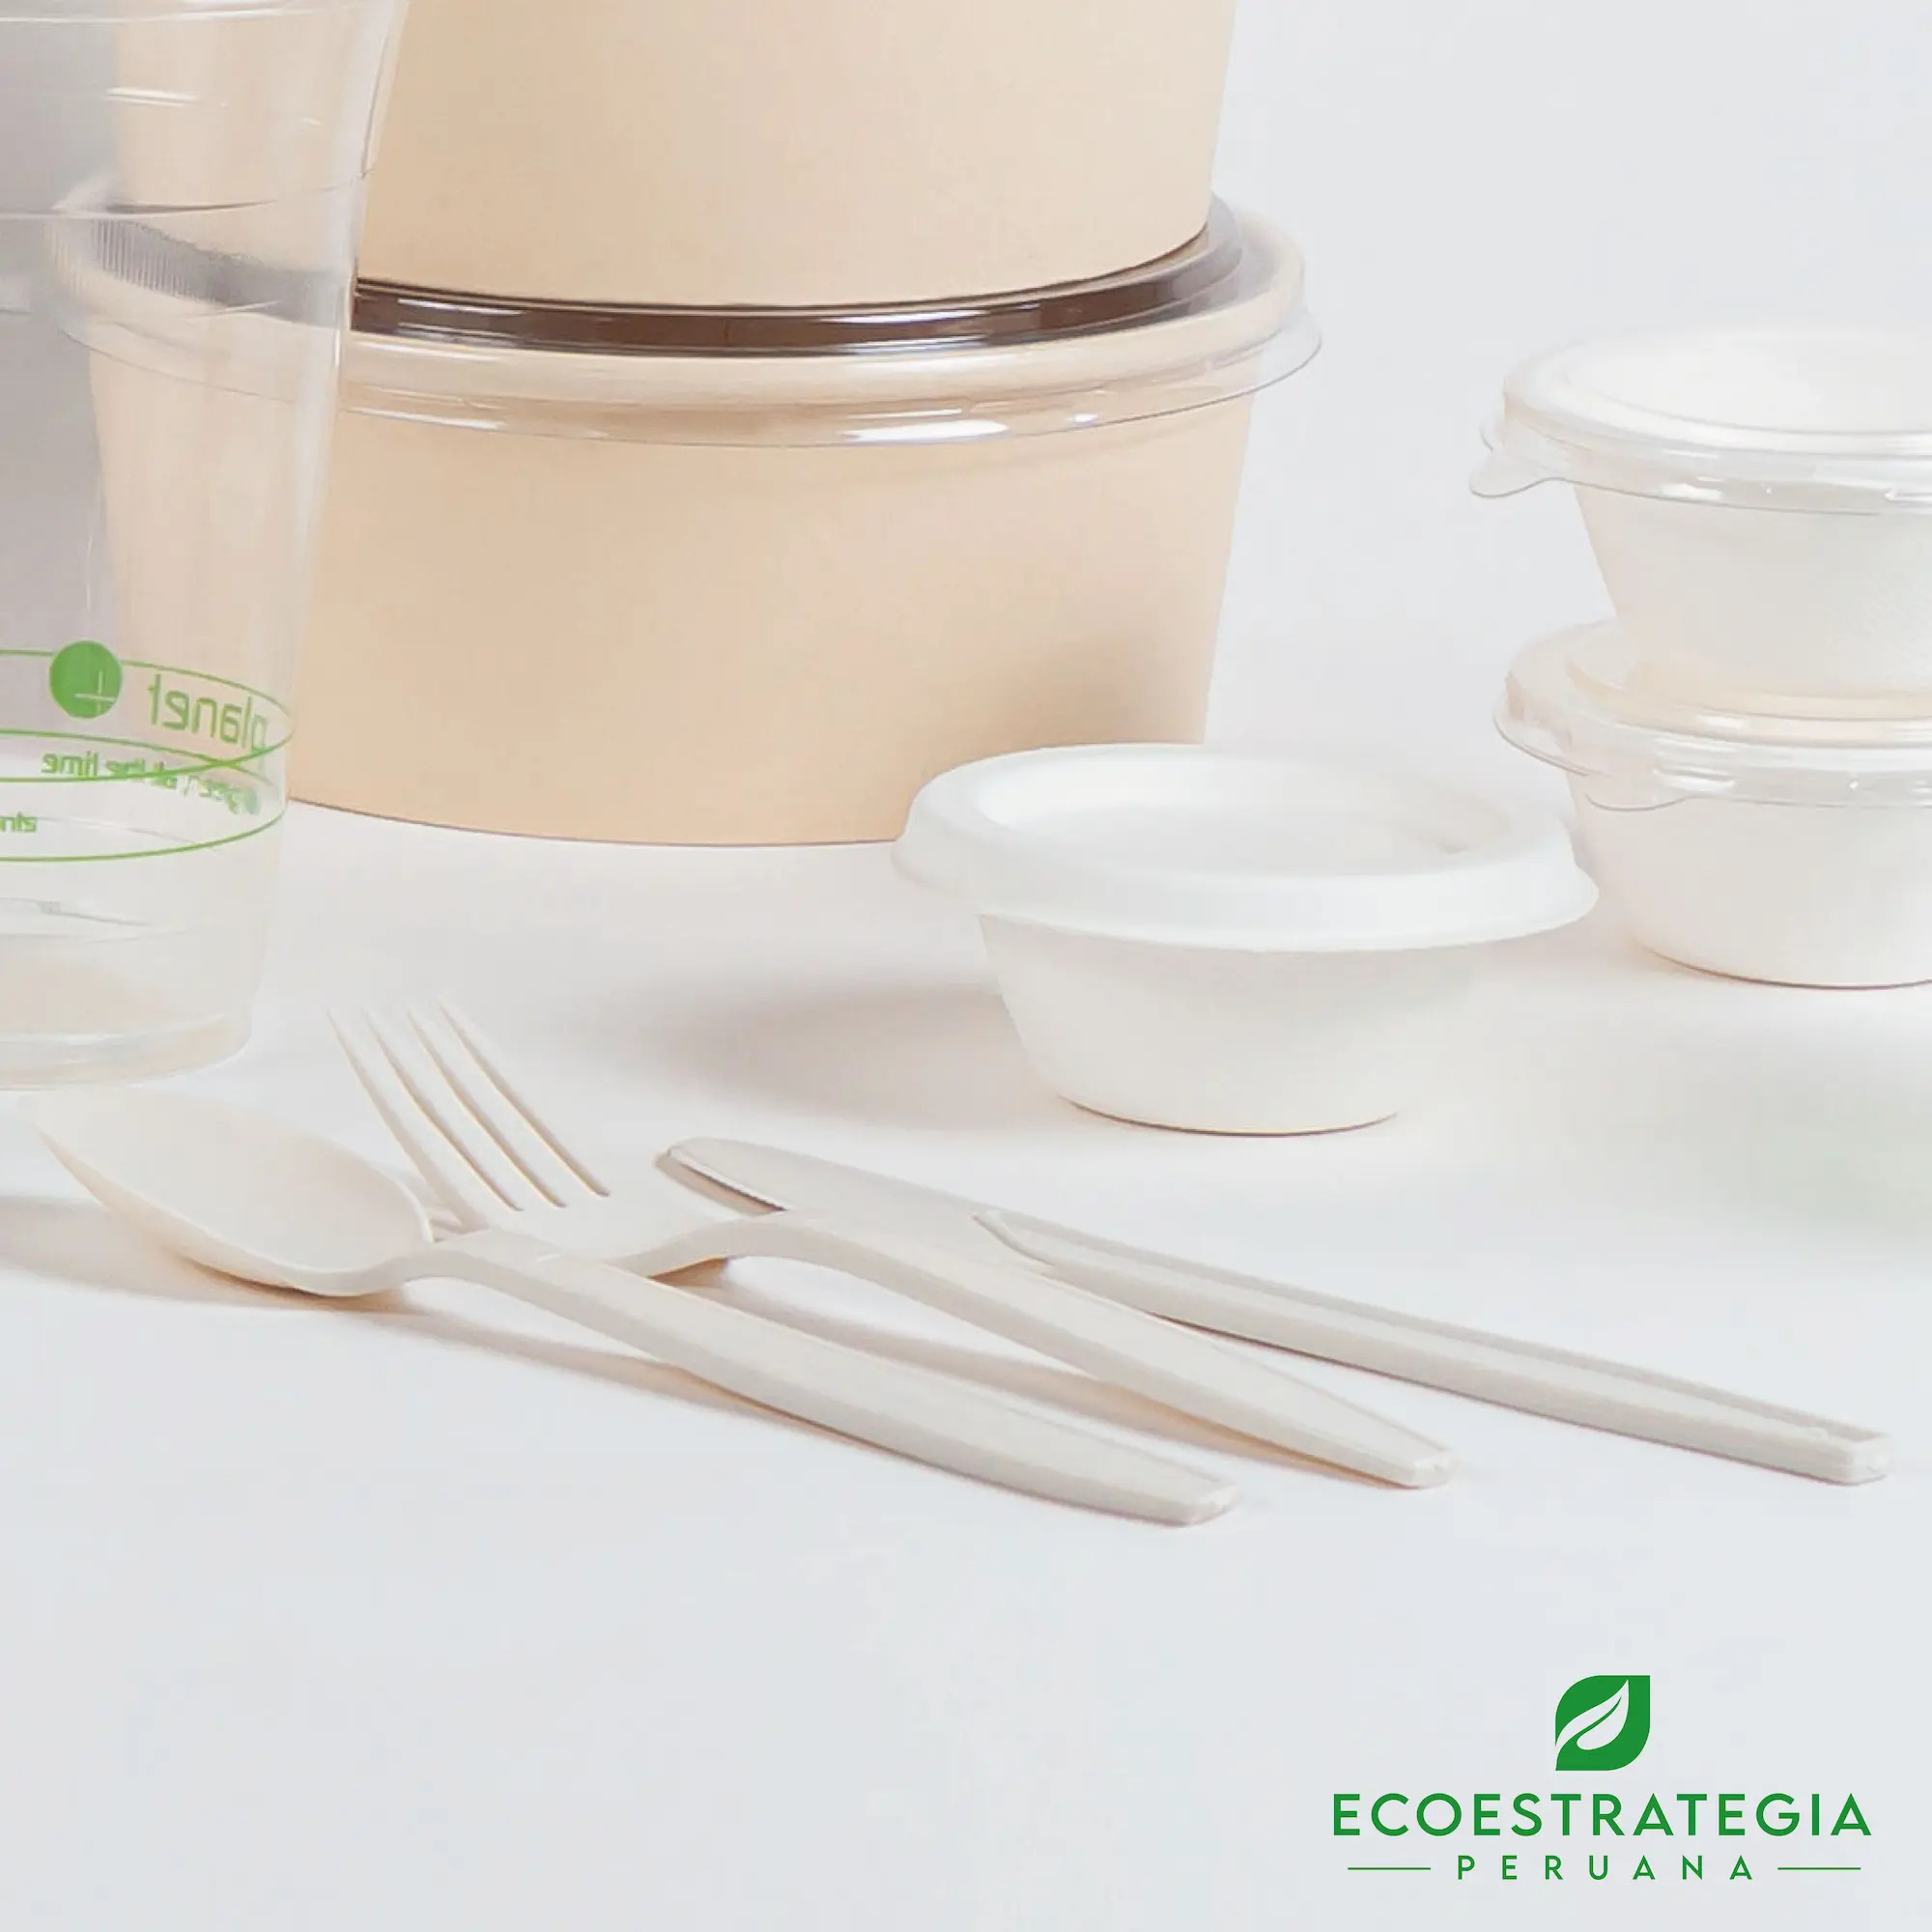 Cubiertos biodegradables EP-T conocido también como cubierto biodegradable, cubierto ecologico, cubierto reciclable. cubierto helados, cubierto postres, cubierto menu, Tenedor biodegradable 15 cm, tenedor biodegradable, tenedores compostables, tenedores eco 16 fibra de maíz, tenedor biodegradable blanco 6”, tenedor, tenedor biodegradable cubierto, productos compostables, tenedor descartable biodegradable, cubiertos compostables, set de cubiertos eco, tenedores ecológicos, cubiertos biodegradables, tenedor blanca biodegradable, tenedor para delivery, tenedores biodegradables peru, importadores de tenedores cubiertos biodegradables, mayoristas de tenedores cubiertos biodegradables, distribuidores de tenedores cubiertos biodegradables